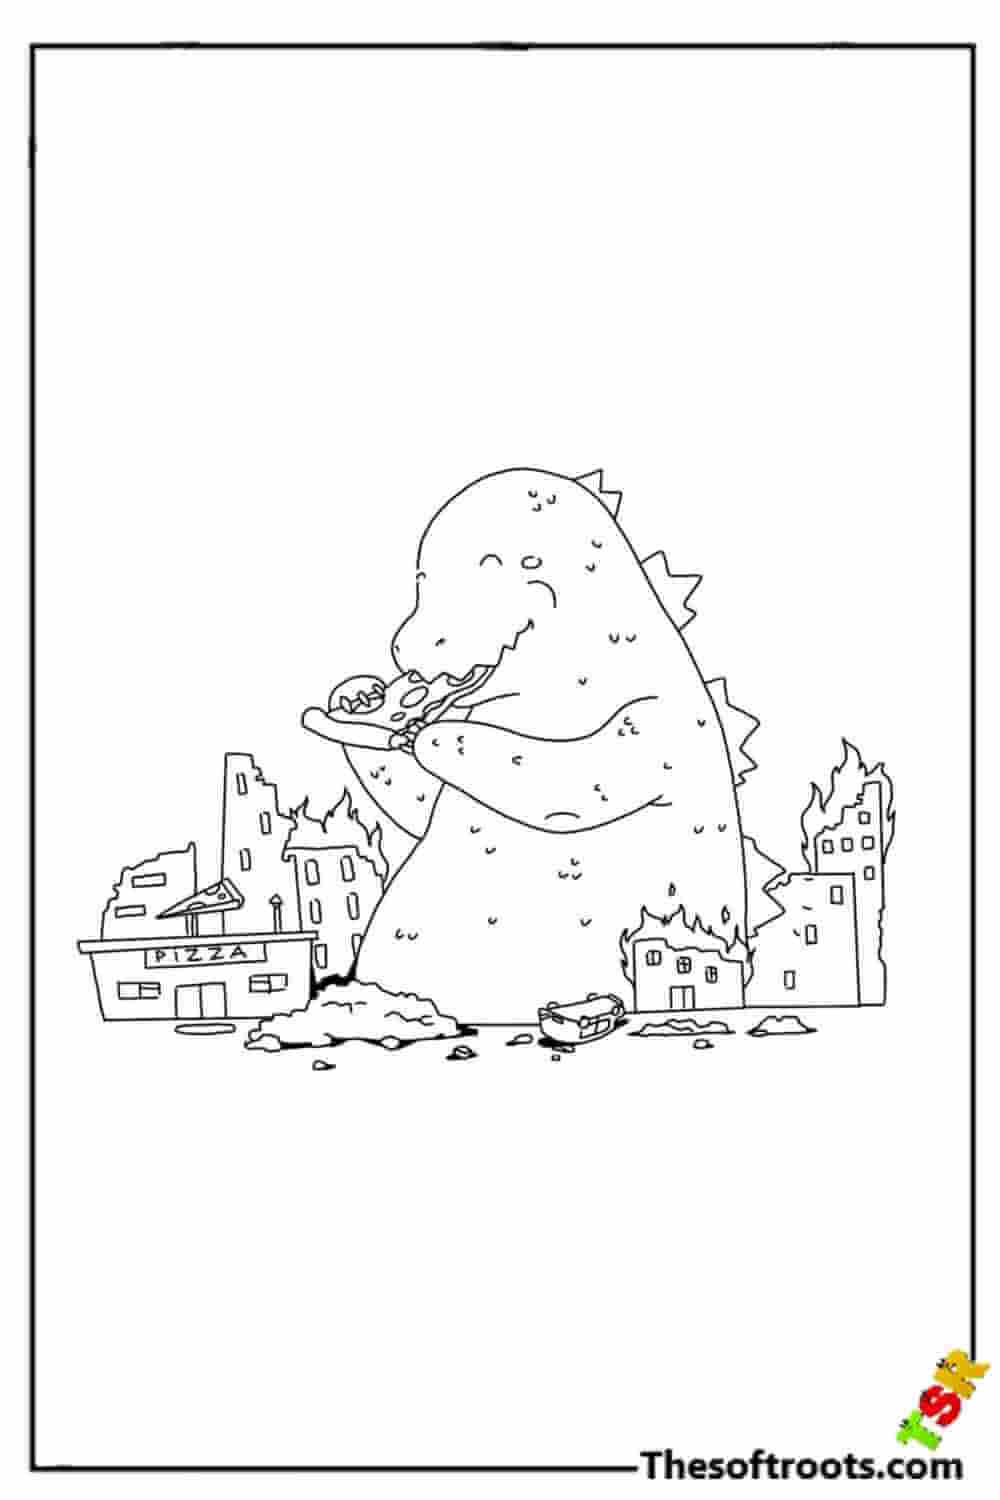 Fat Godzilla coloring pages